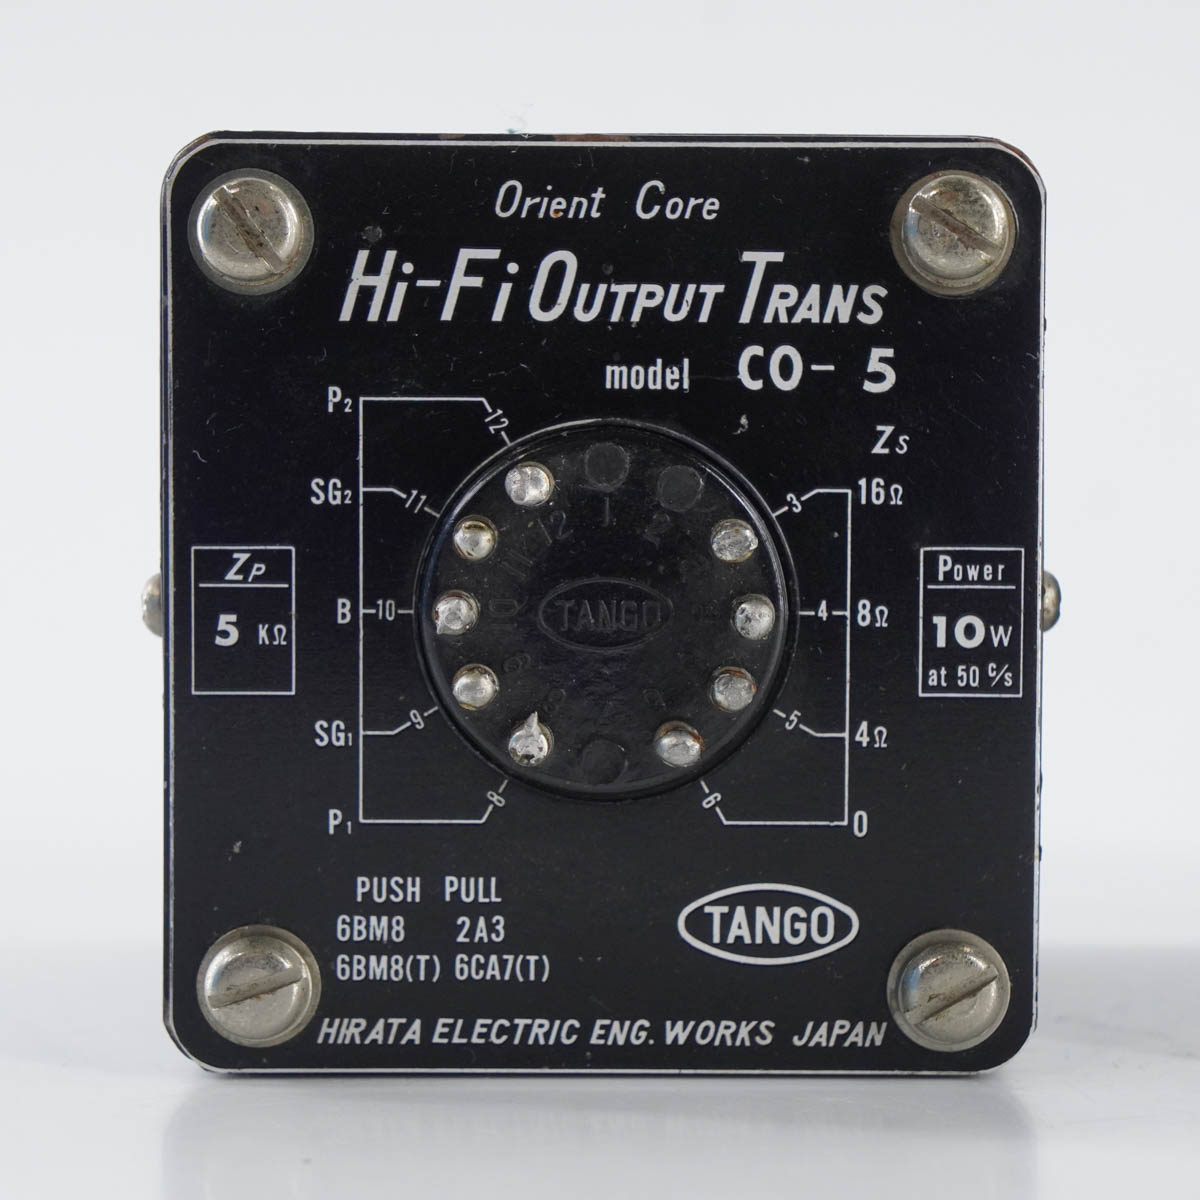 JB]USED 現状販売 2個セット TANGO CO-5 出力トランス Hi-Fi OUTPUT 